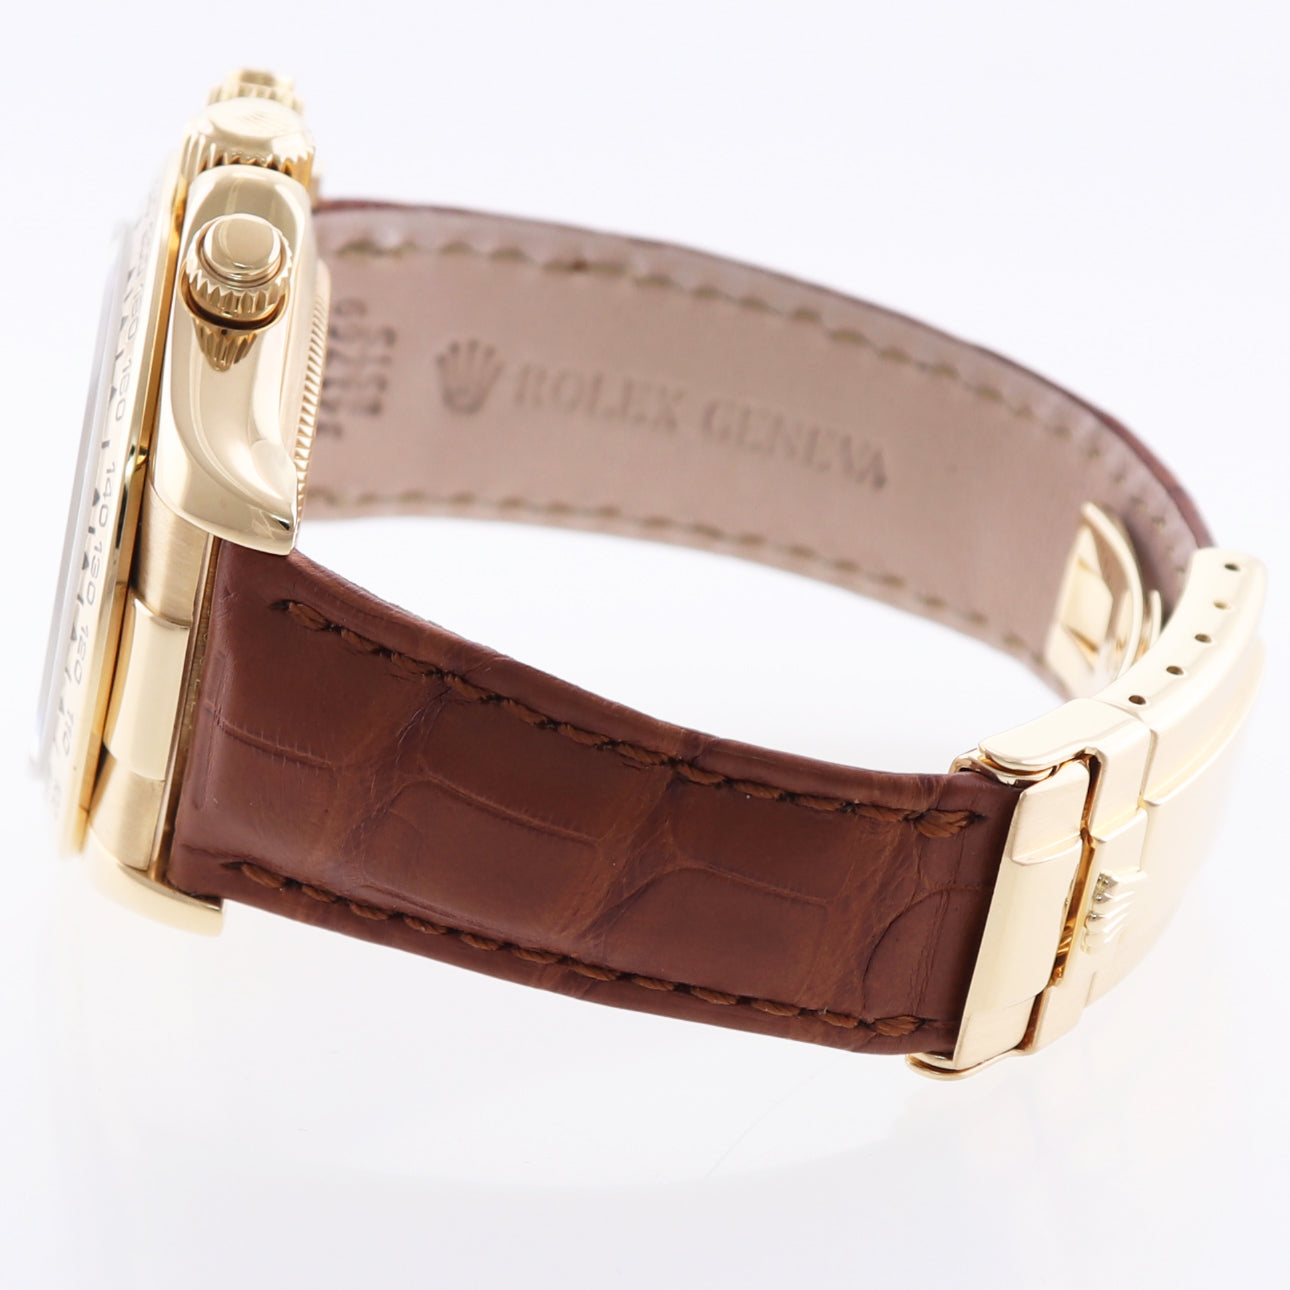 Rolex Daytona Cosmograph Champagne 116518 Yellow Gold Brown Leather Watch Box